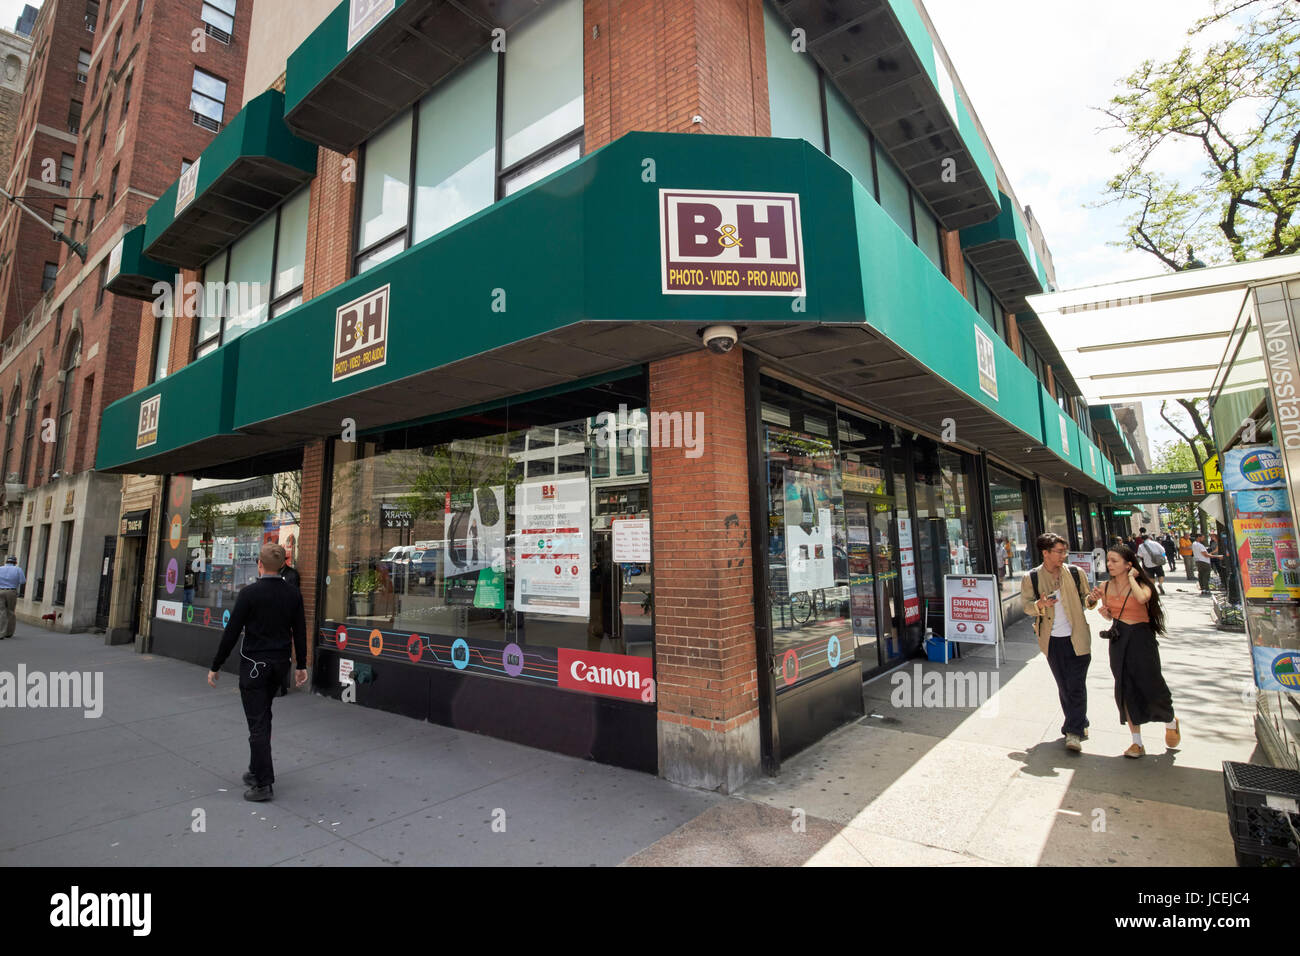 b&h photo video store New York City USA Stock Photo - Alamy